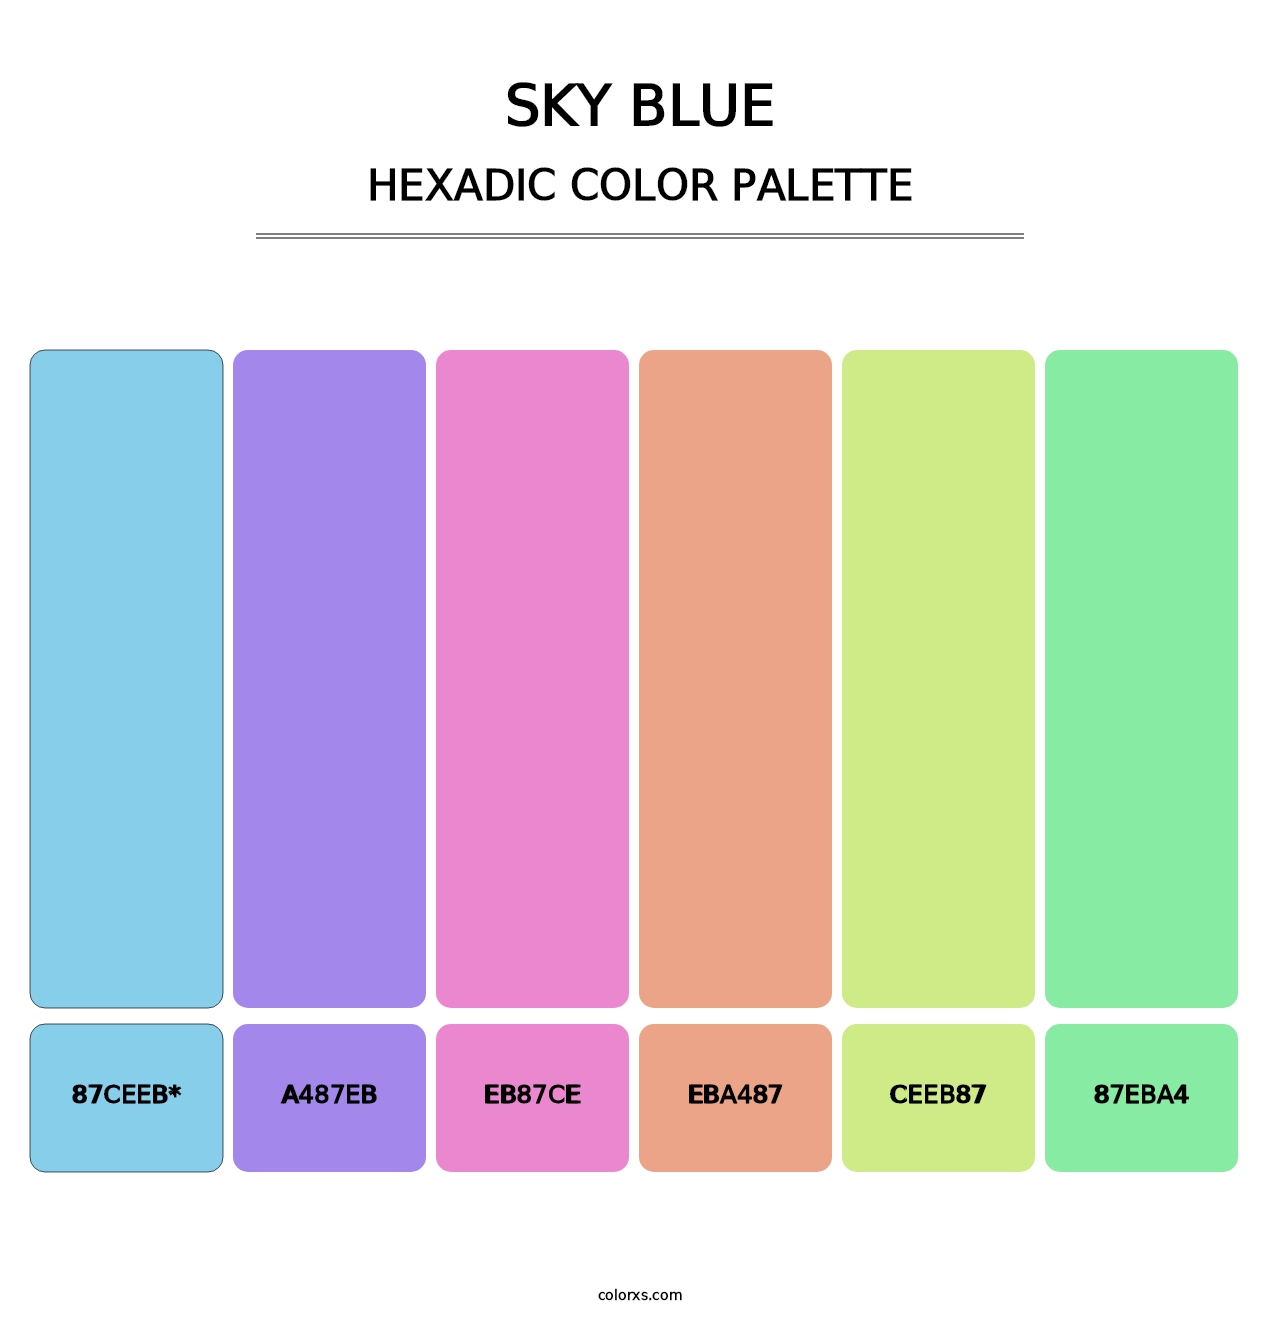 Sky blue - Hexadic Color Palette